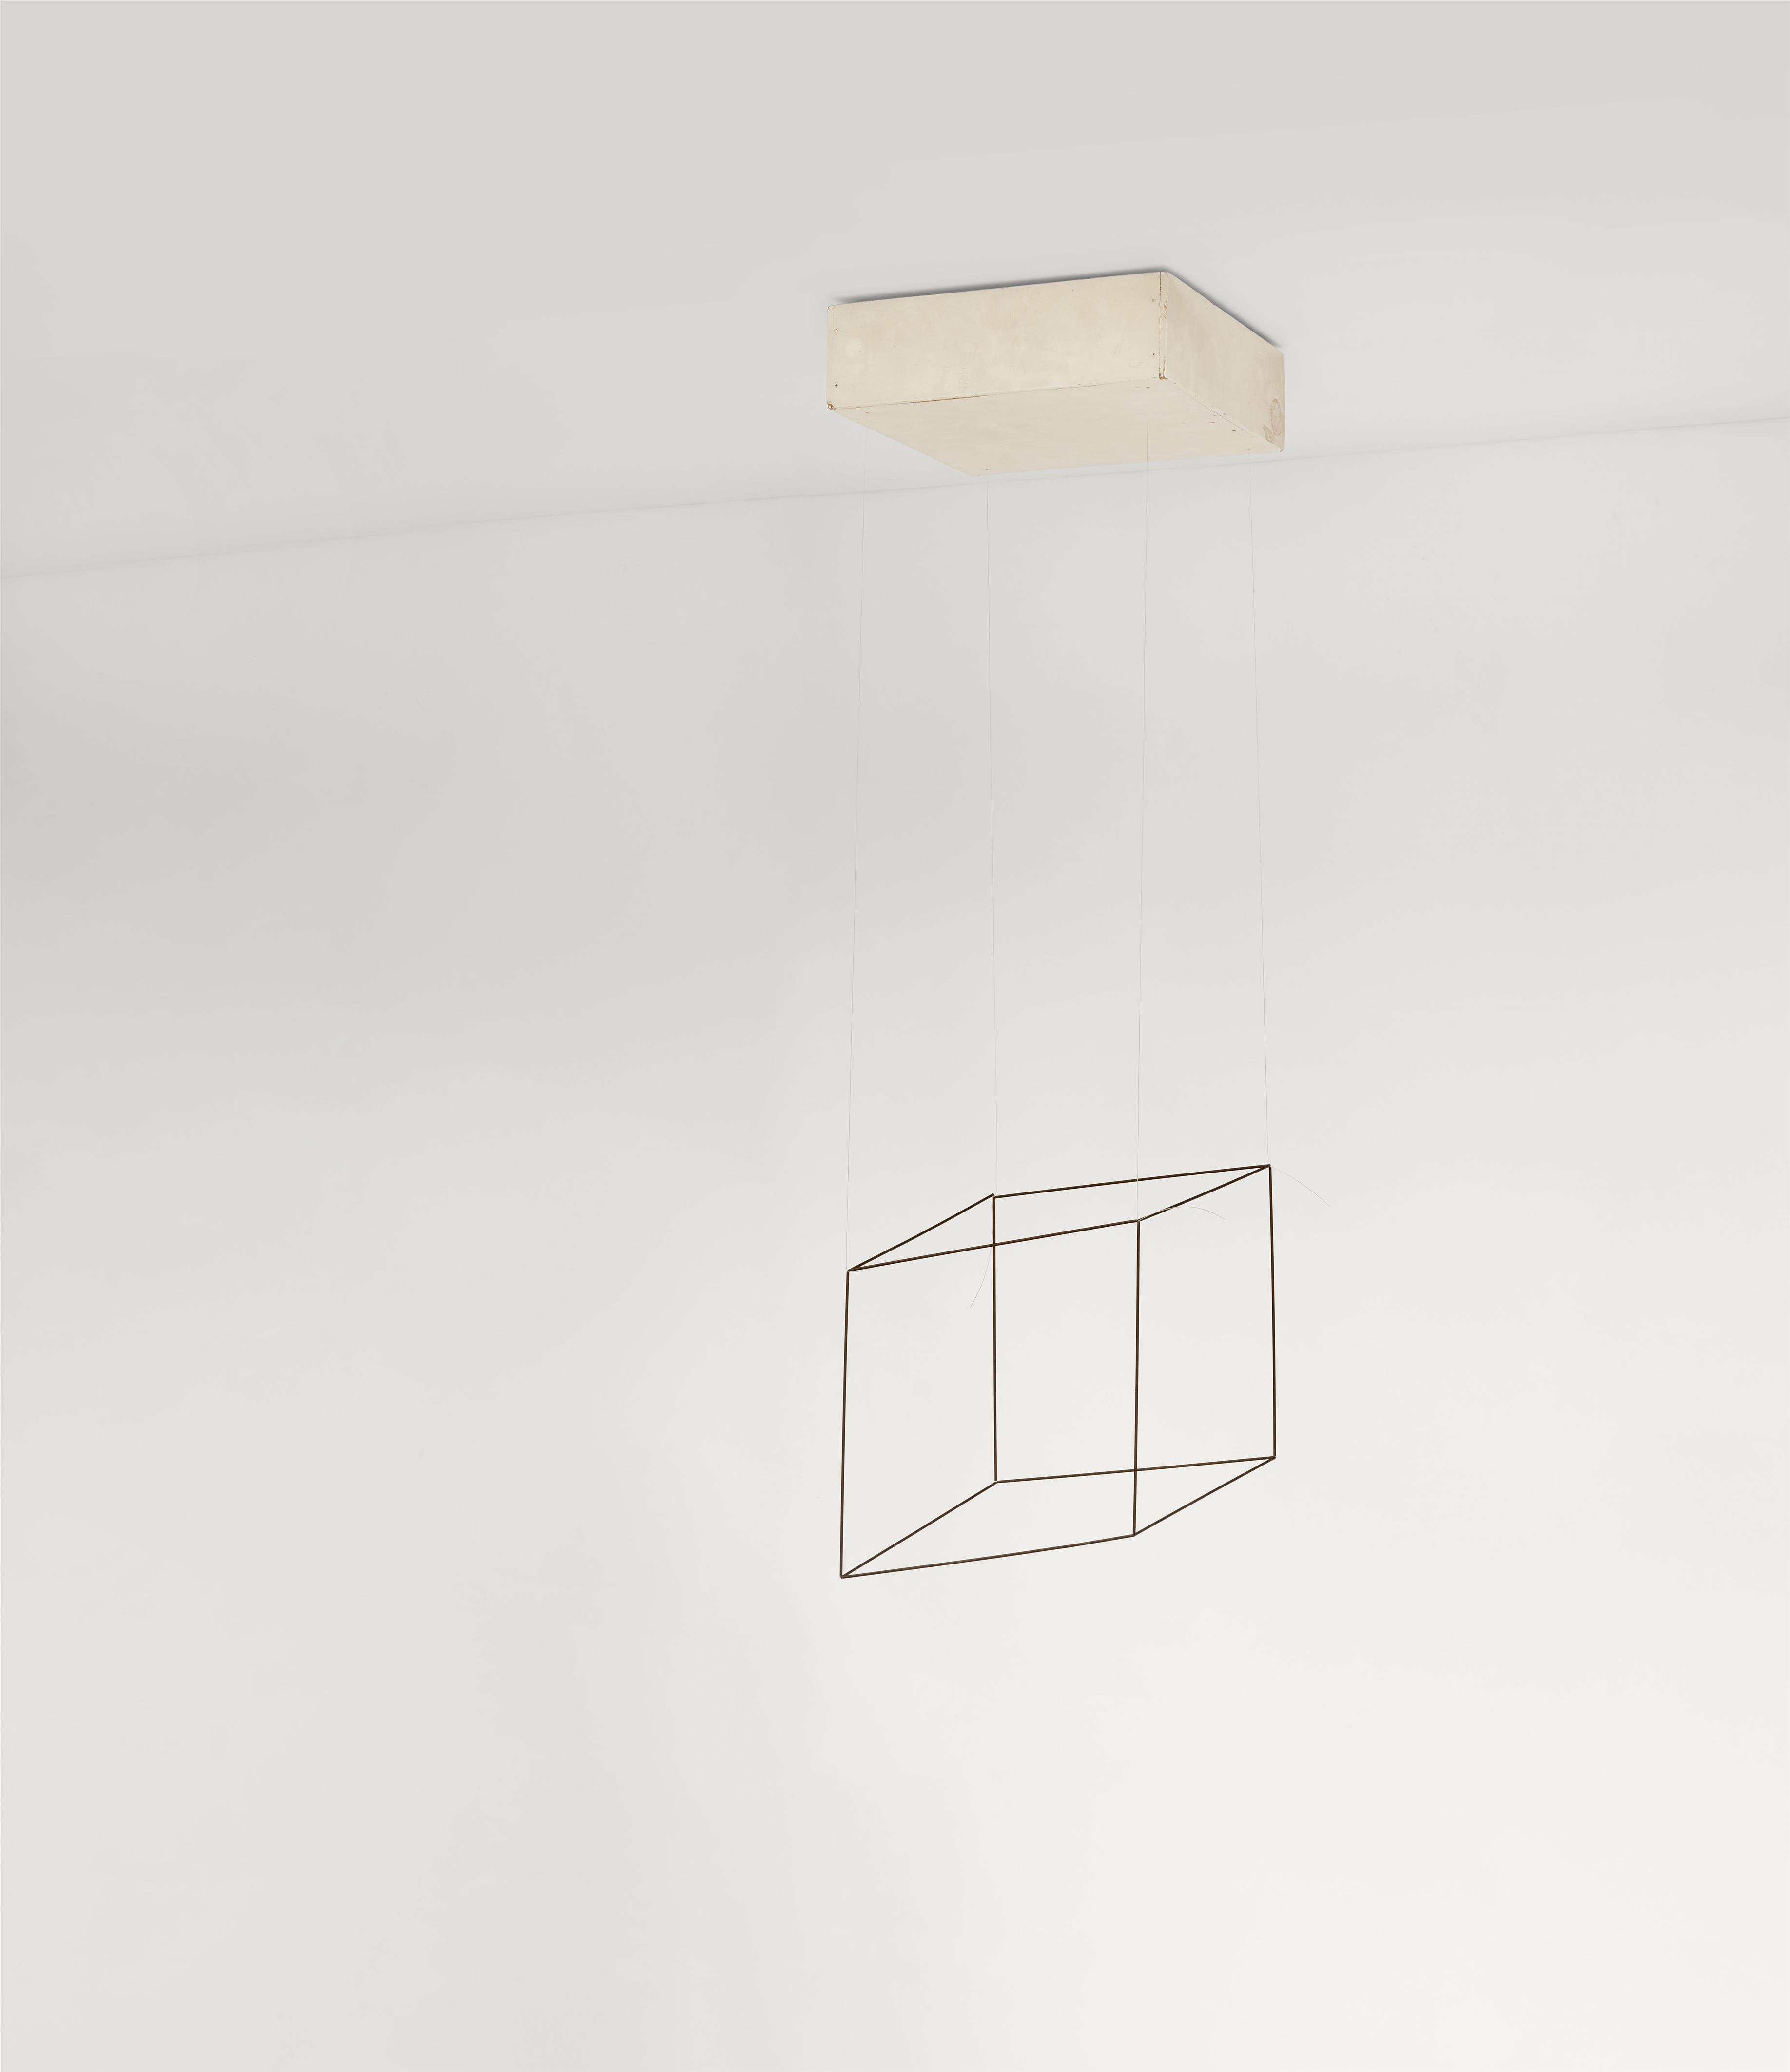 Gianni Colombo - Spazio elastico. Cubo - image-1